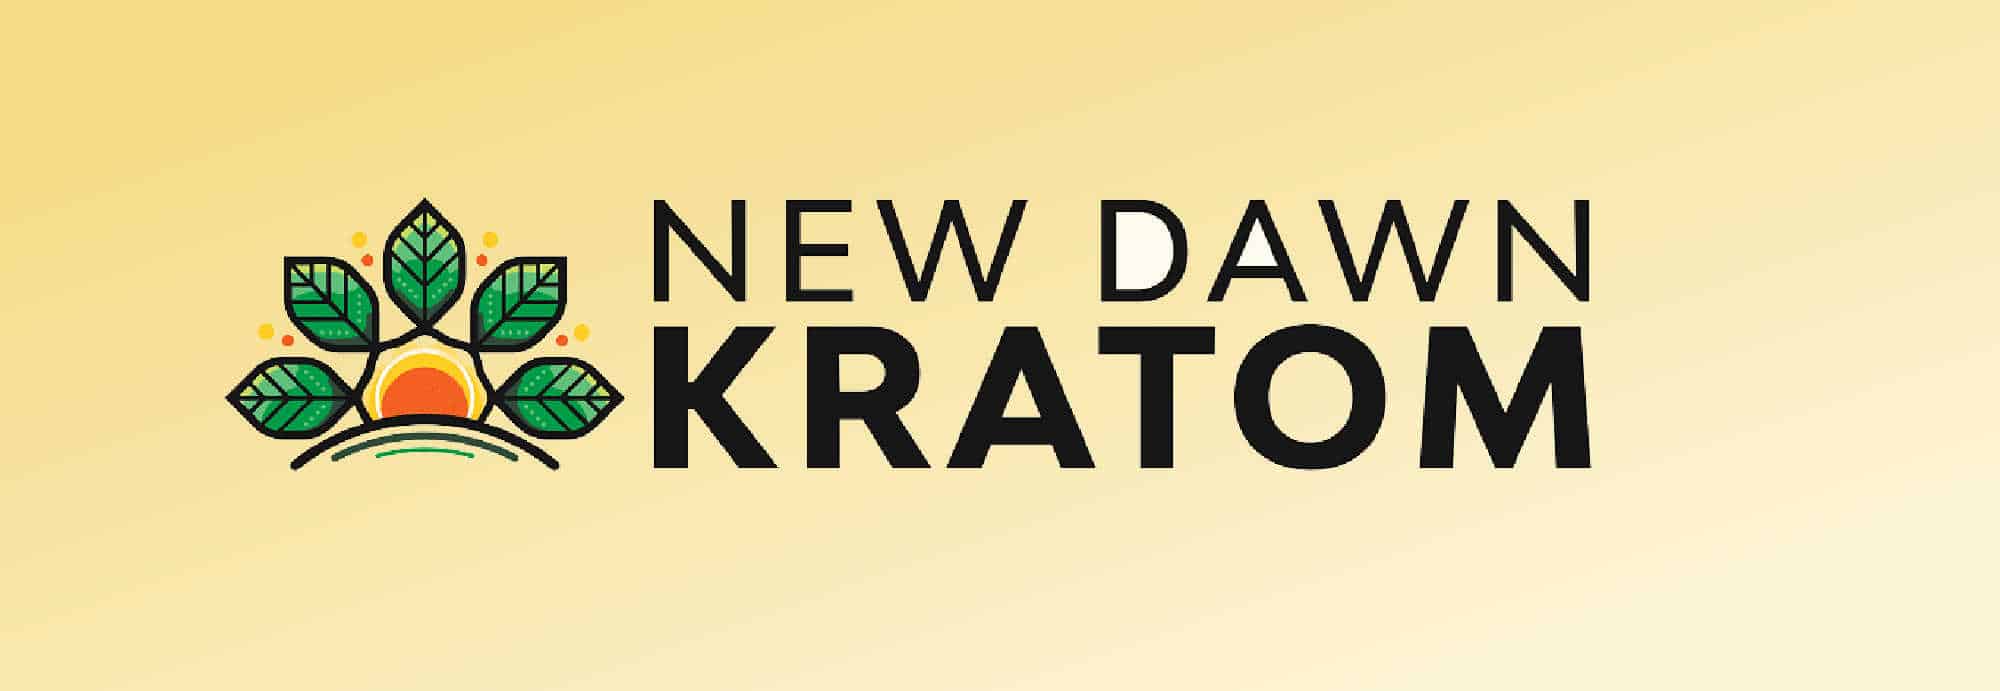 logo of new dawn kratom image